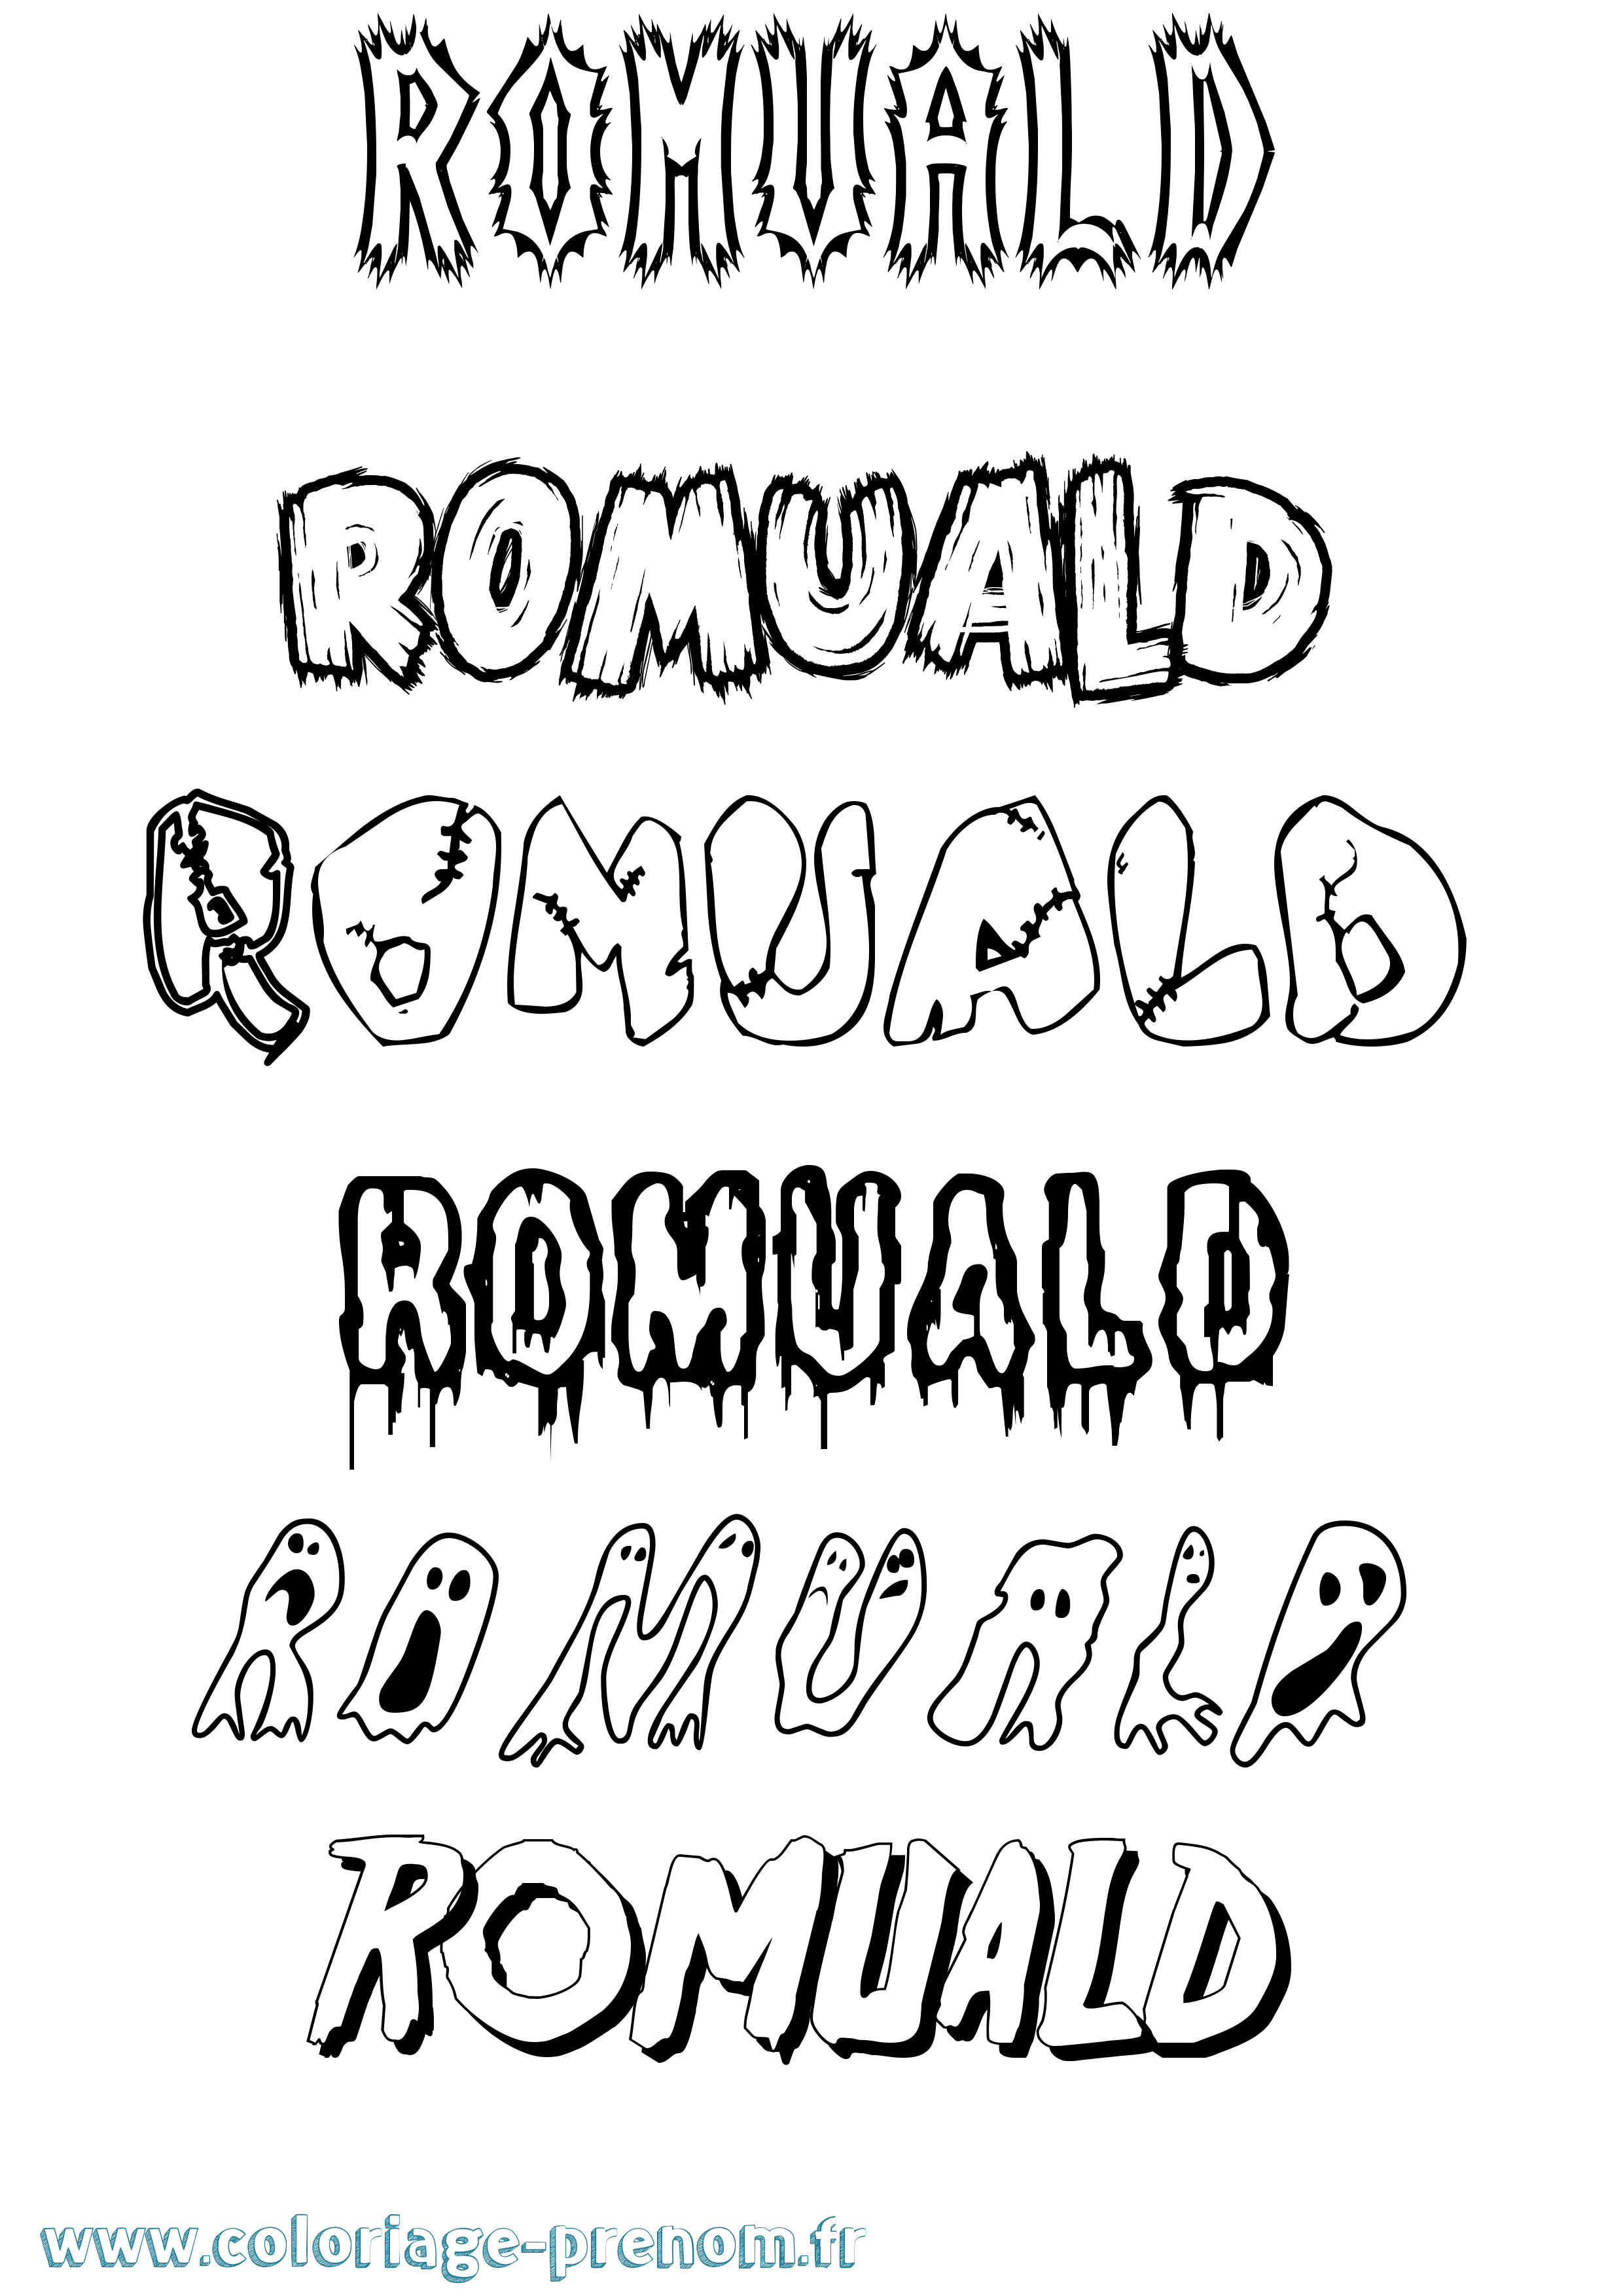 Coloriage prénom Romuald Frisson